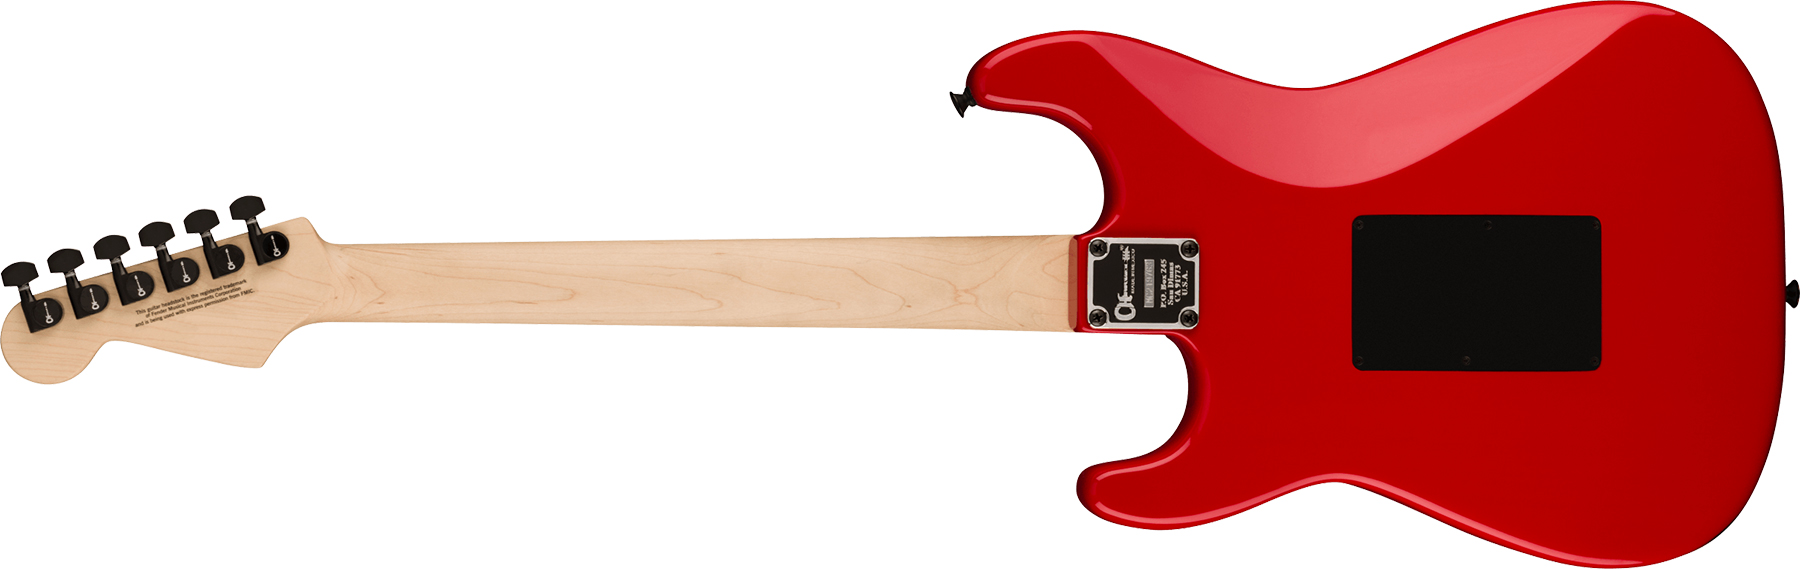 Charvel So-cal Style 1 Hss Fr E Pro-mod Seymour Duncan Eb - Ferrari Red - Guitarra eléctrica con forma de str. - Variation 1